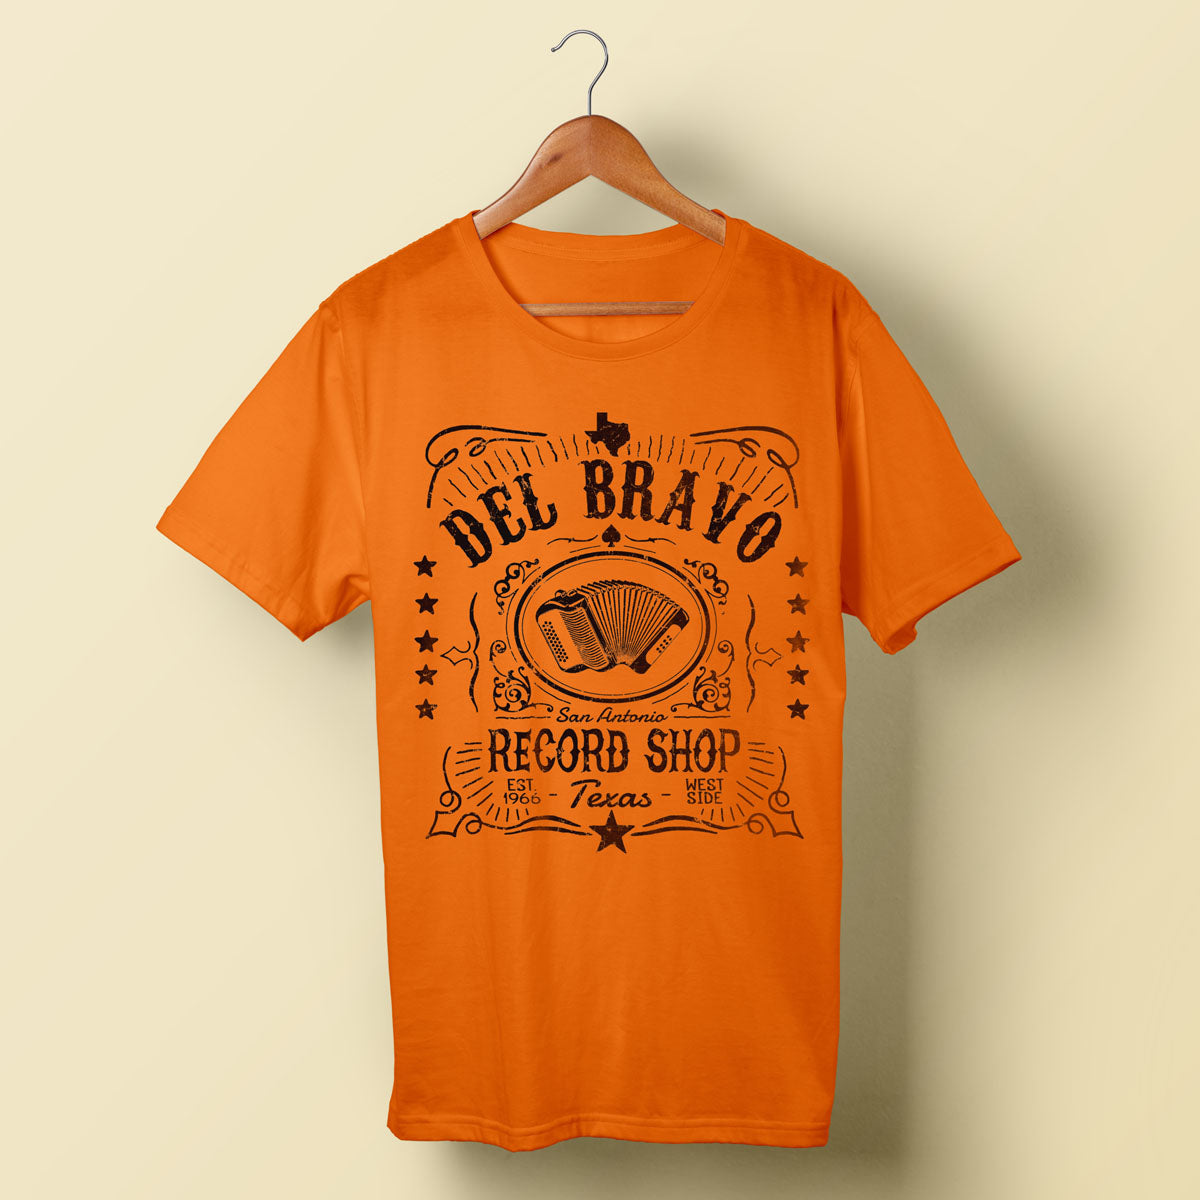 Del Bravo Record Shop Label (Orange) T-Shirt DLB MERCH